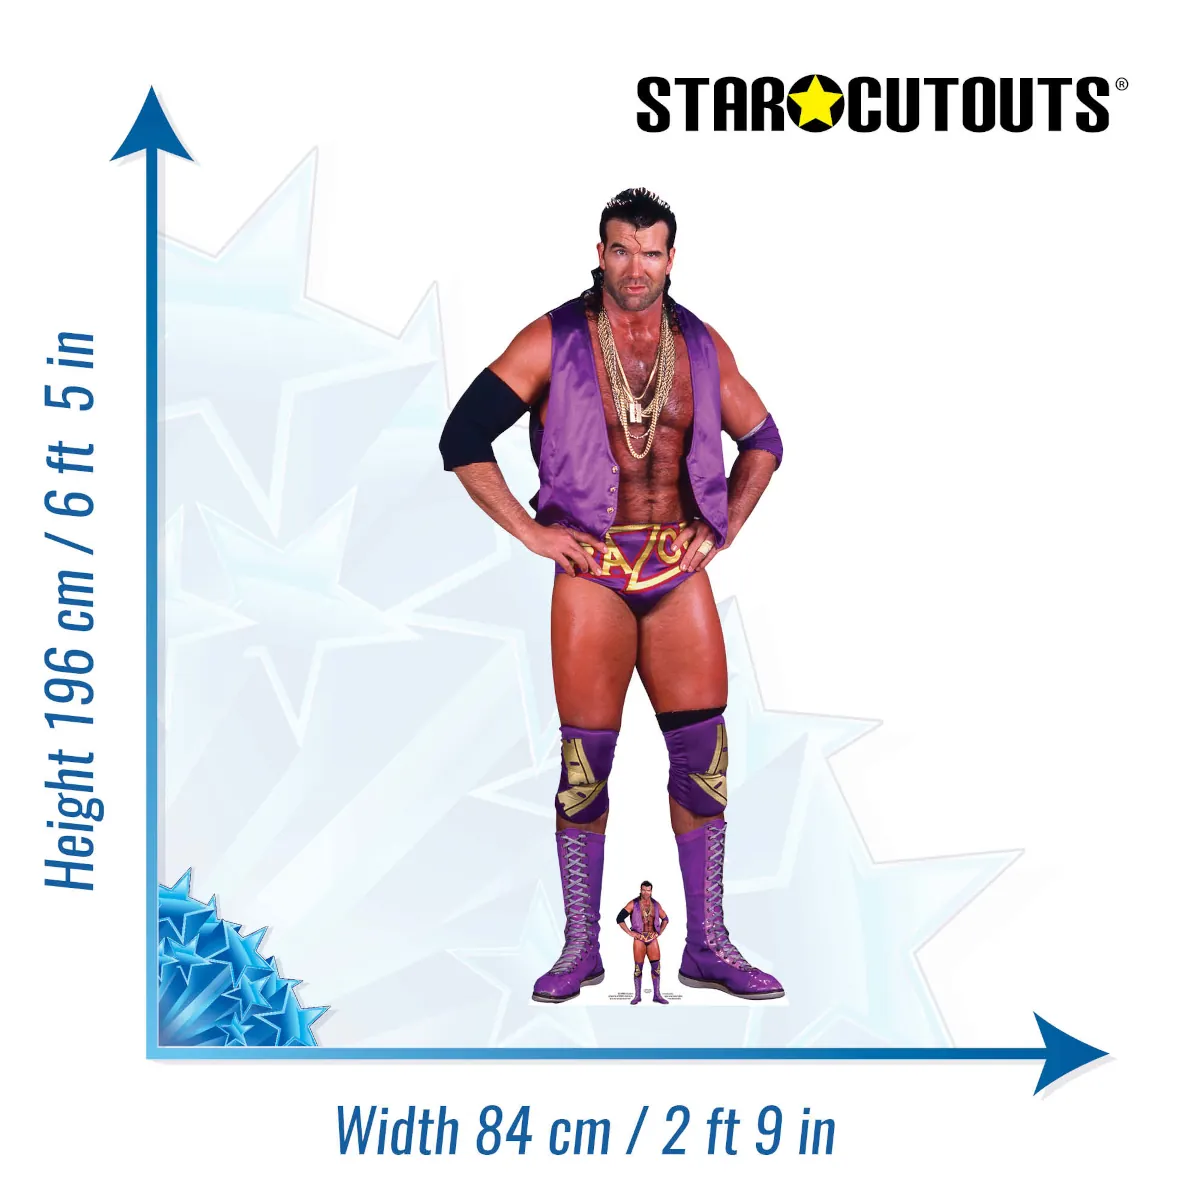 SC4097 Razor Ramon (WWE) Official Lifesize + Mini Cardboard Cutout Standee Size